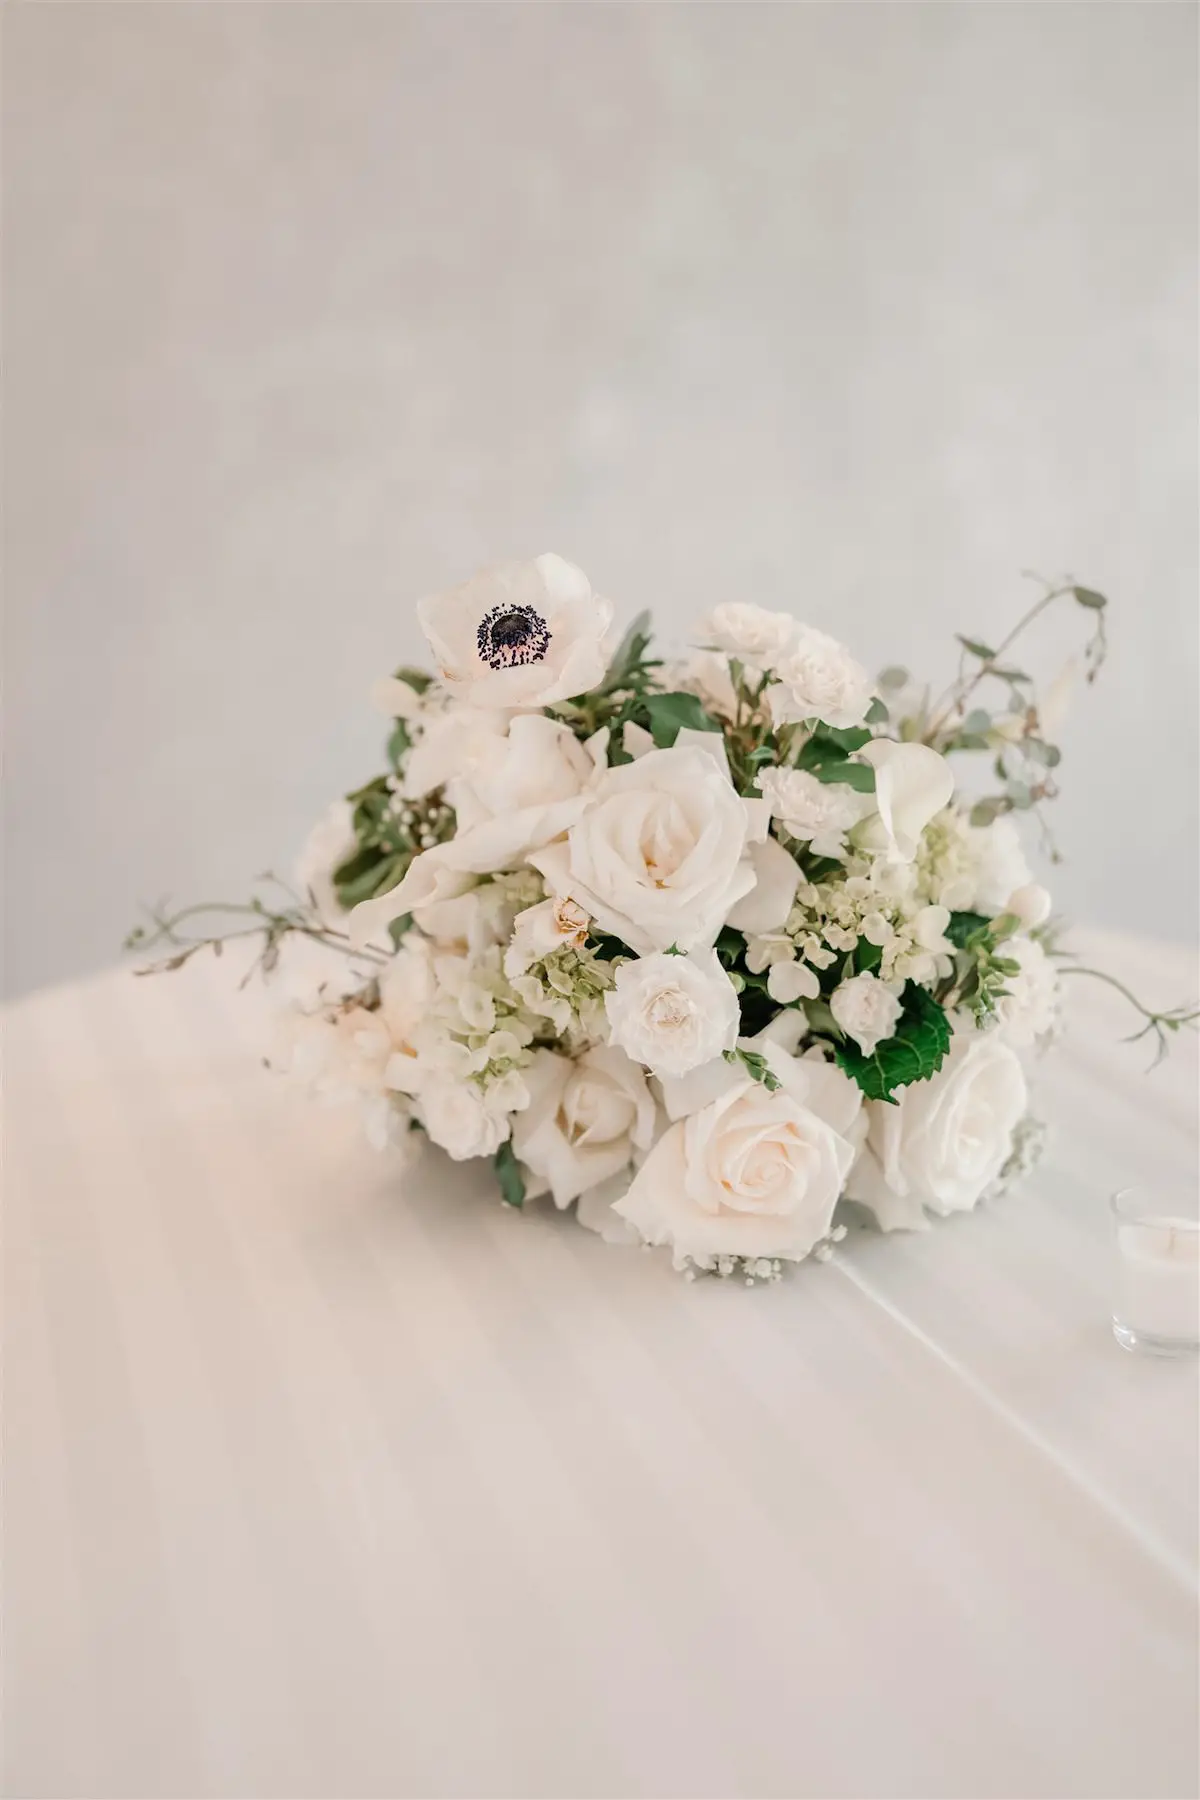 White winter wedding bouquet - Tunji Studio Photography